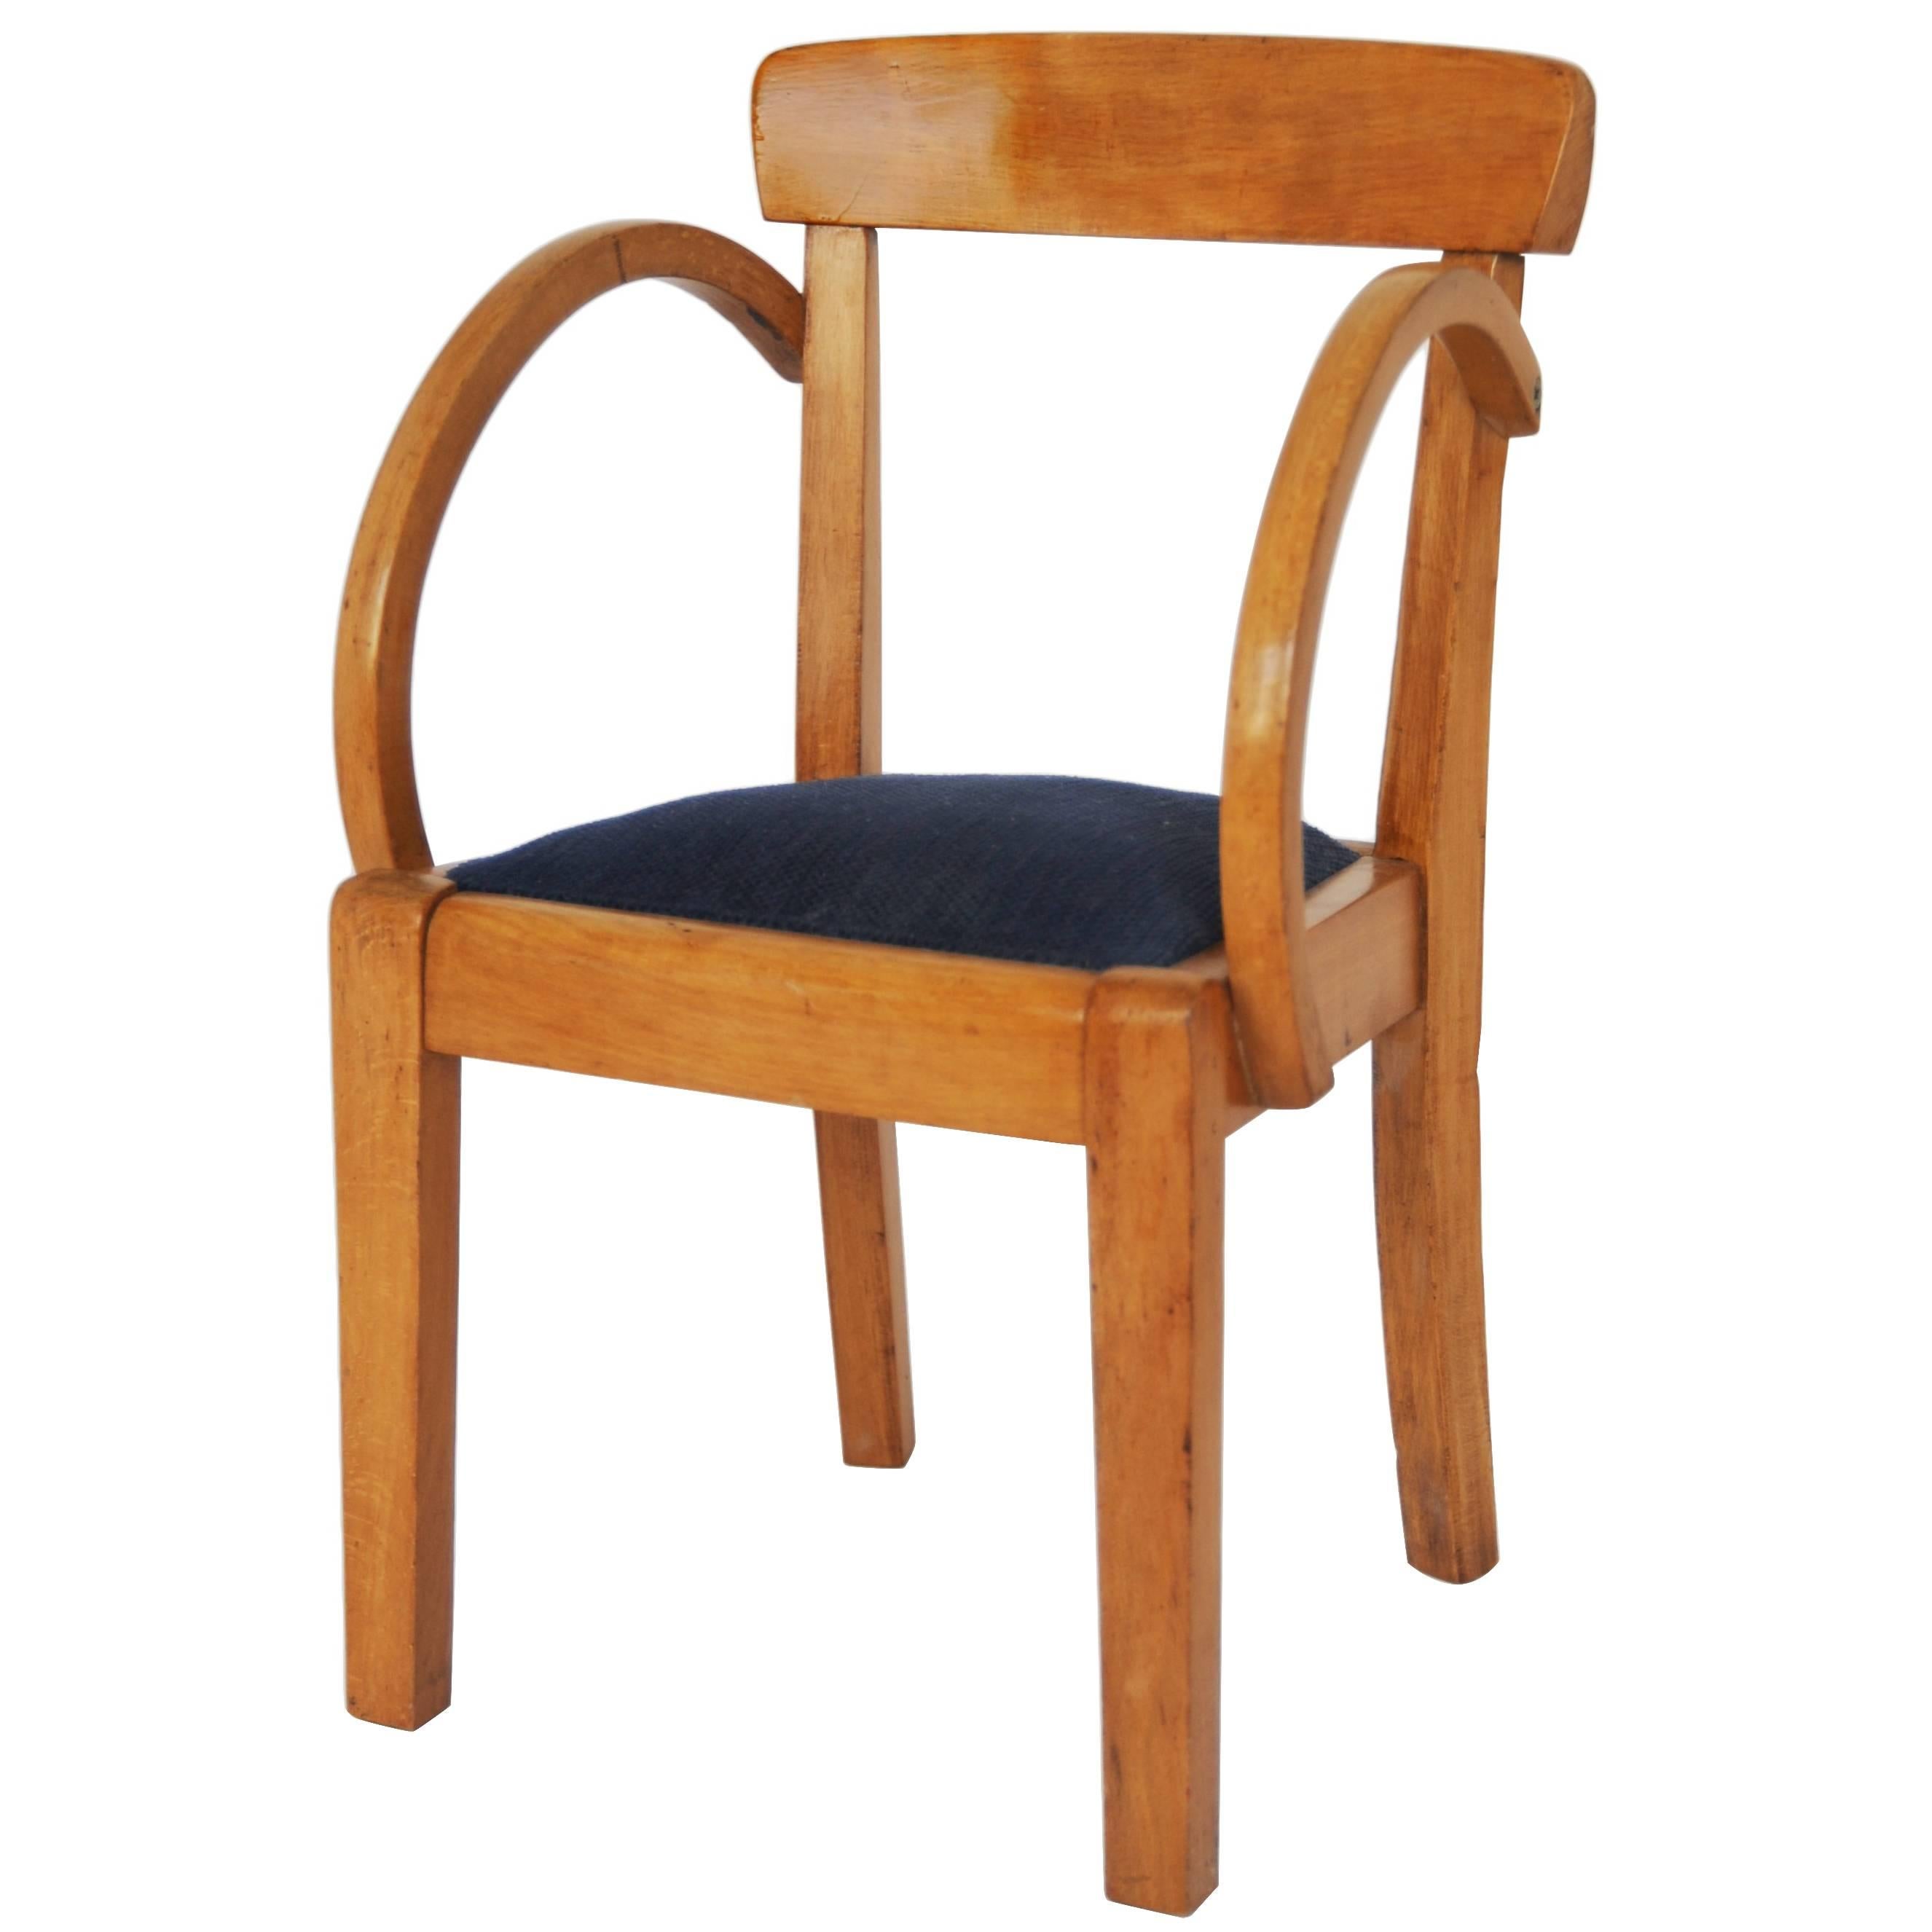 Baumann Chair, Baumann France, Vintage, France, 1960s